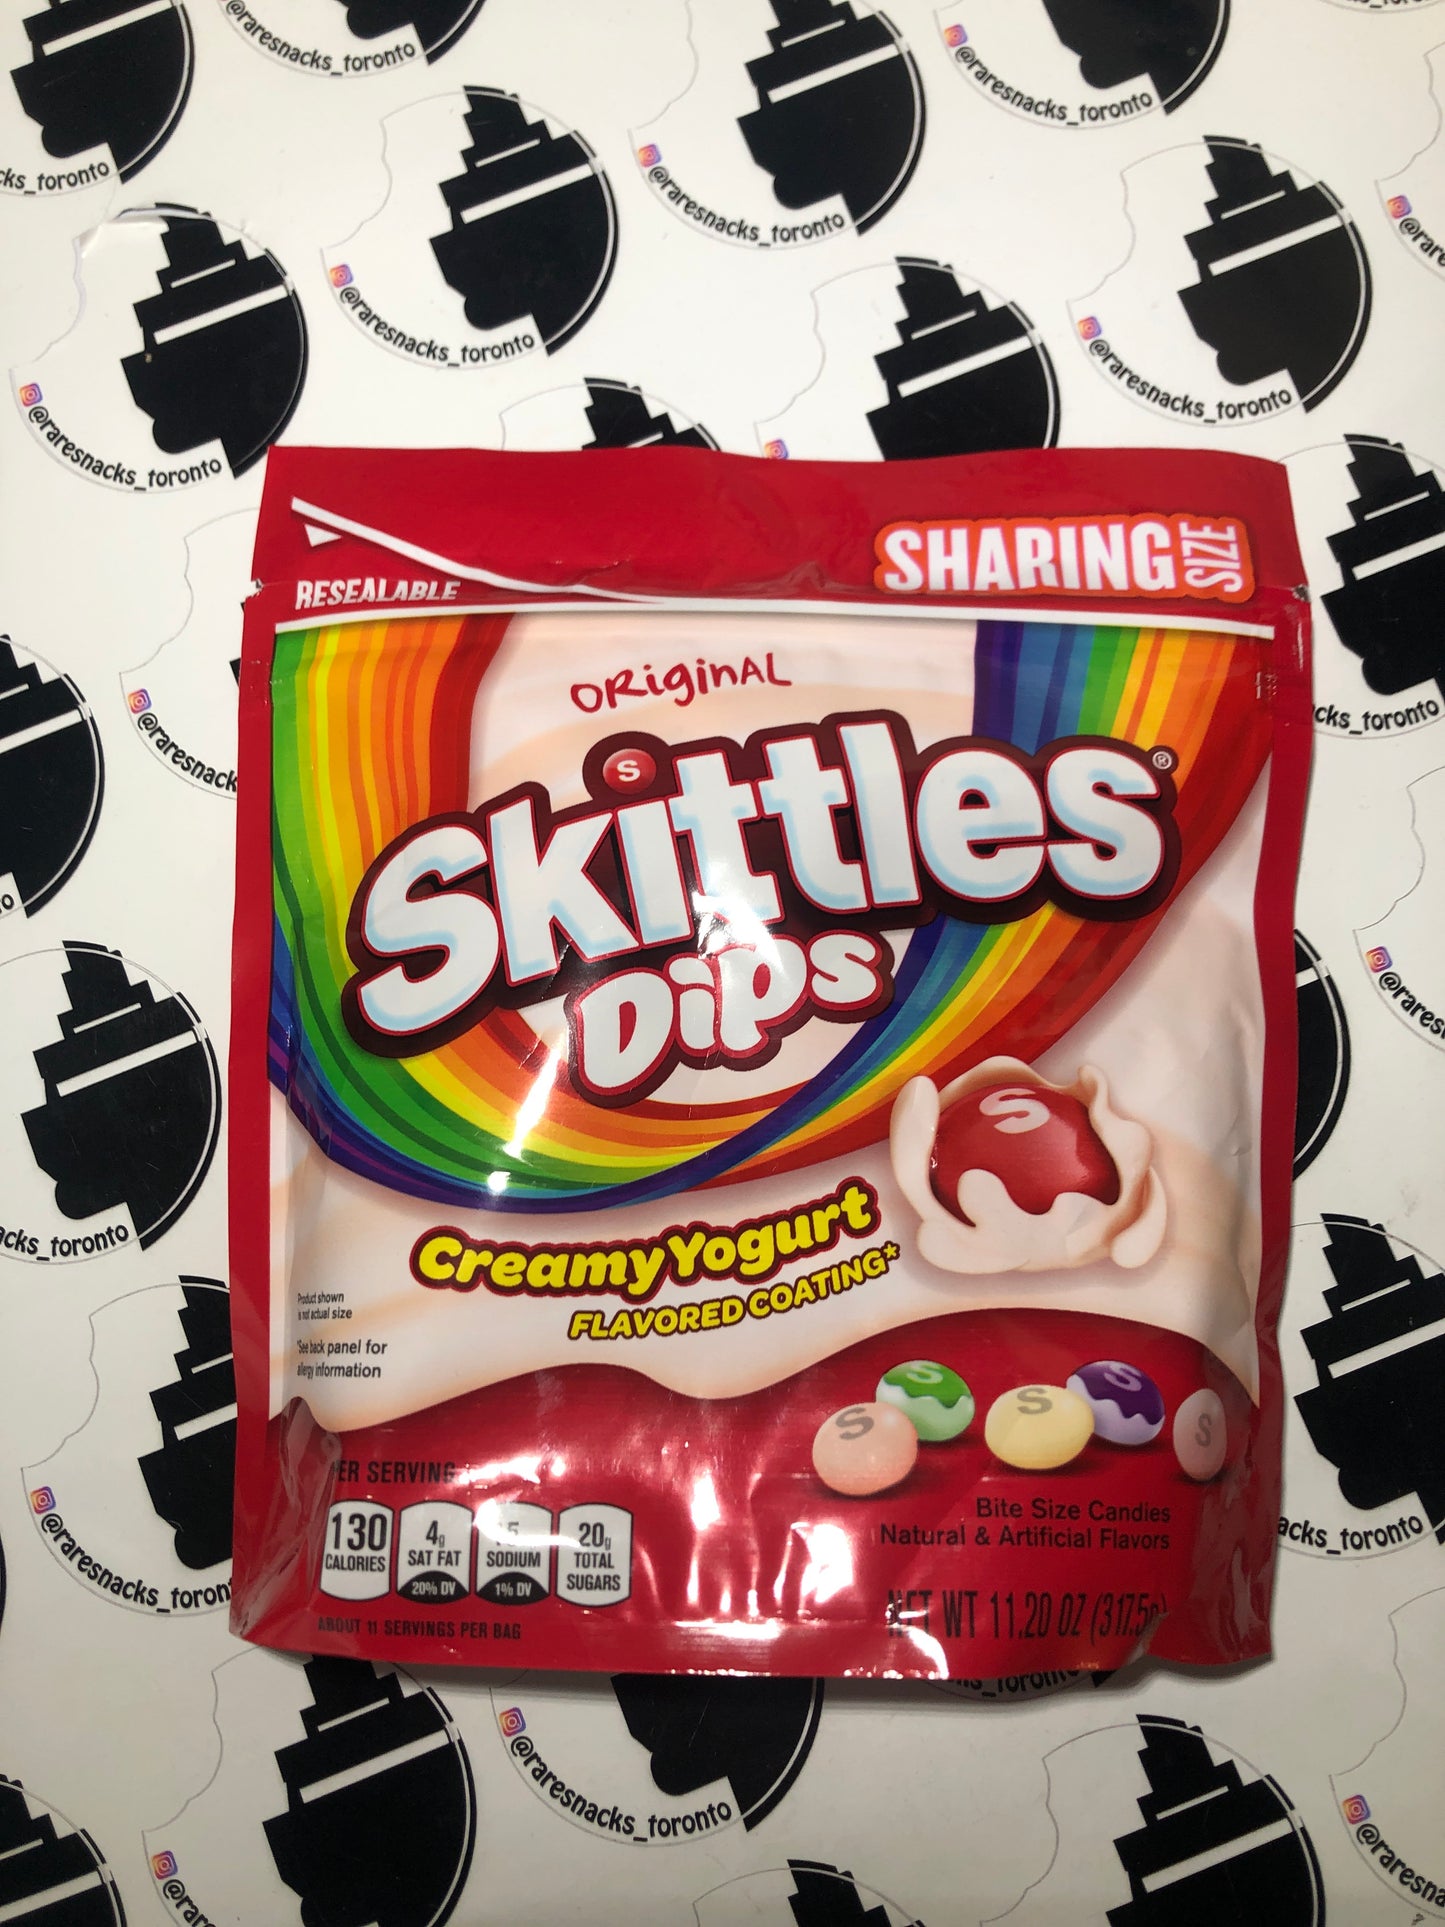 Skittles Dips Creamy Yogurt Flavored Coating Sharing Size